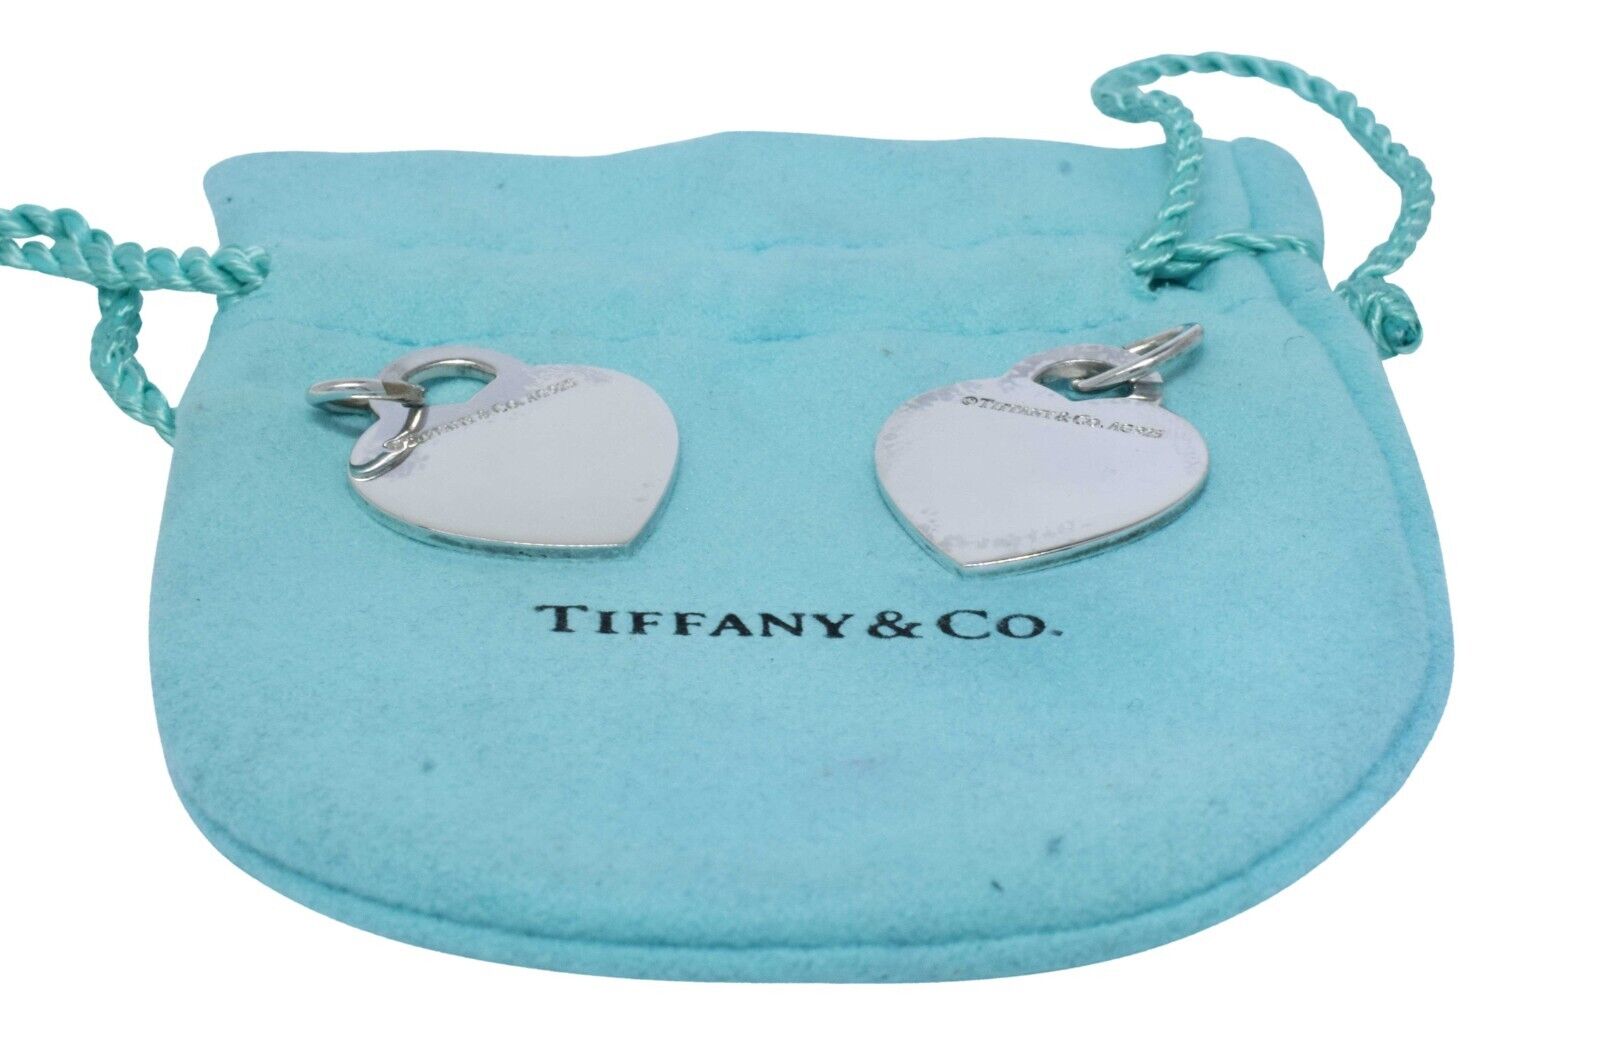 Tiffany & Co 925 Sterling Silver Set of 2 Plain Heart Charm Pendant w/ Pouch